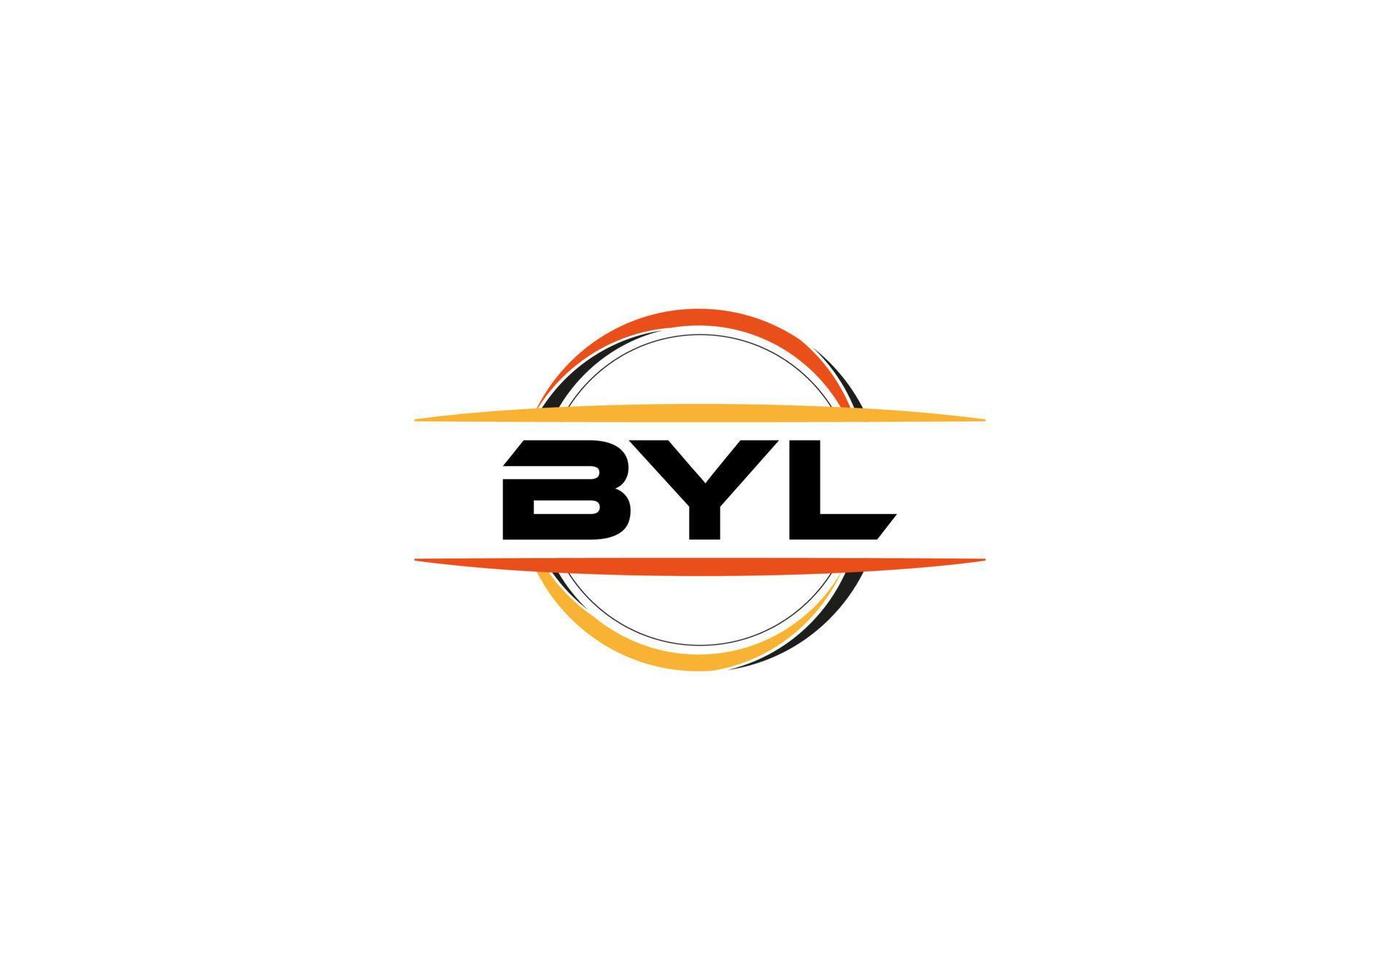 BYL letter royalty mandala shape logo. BYL brush art logo. BYL logo for a company, business, and commercial use. vector